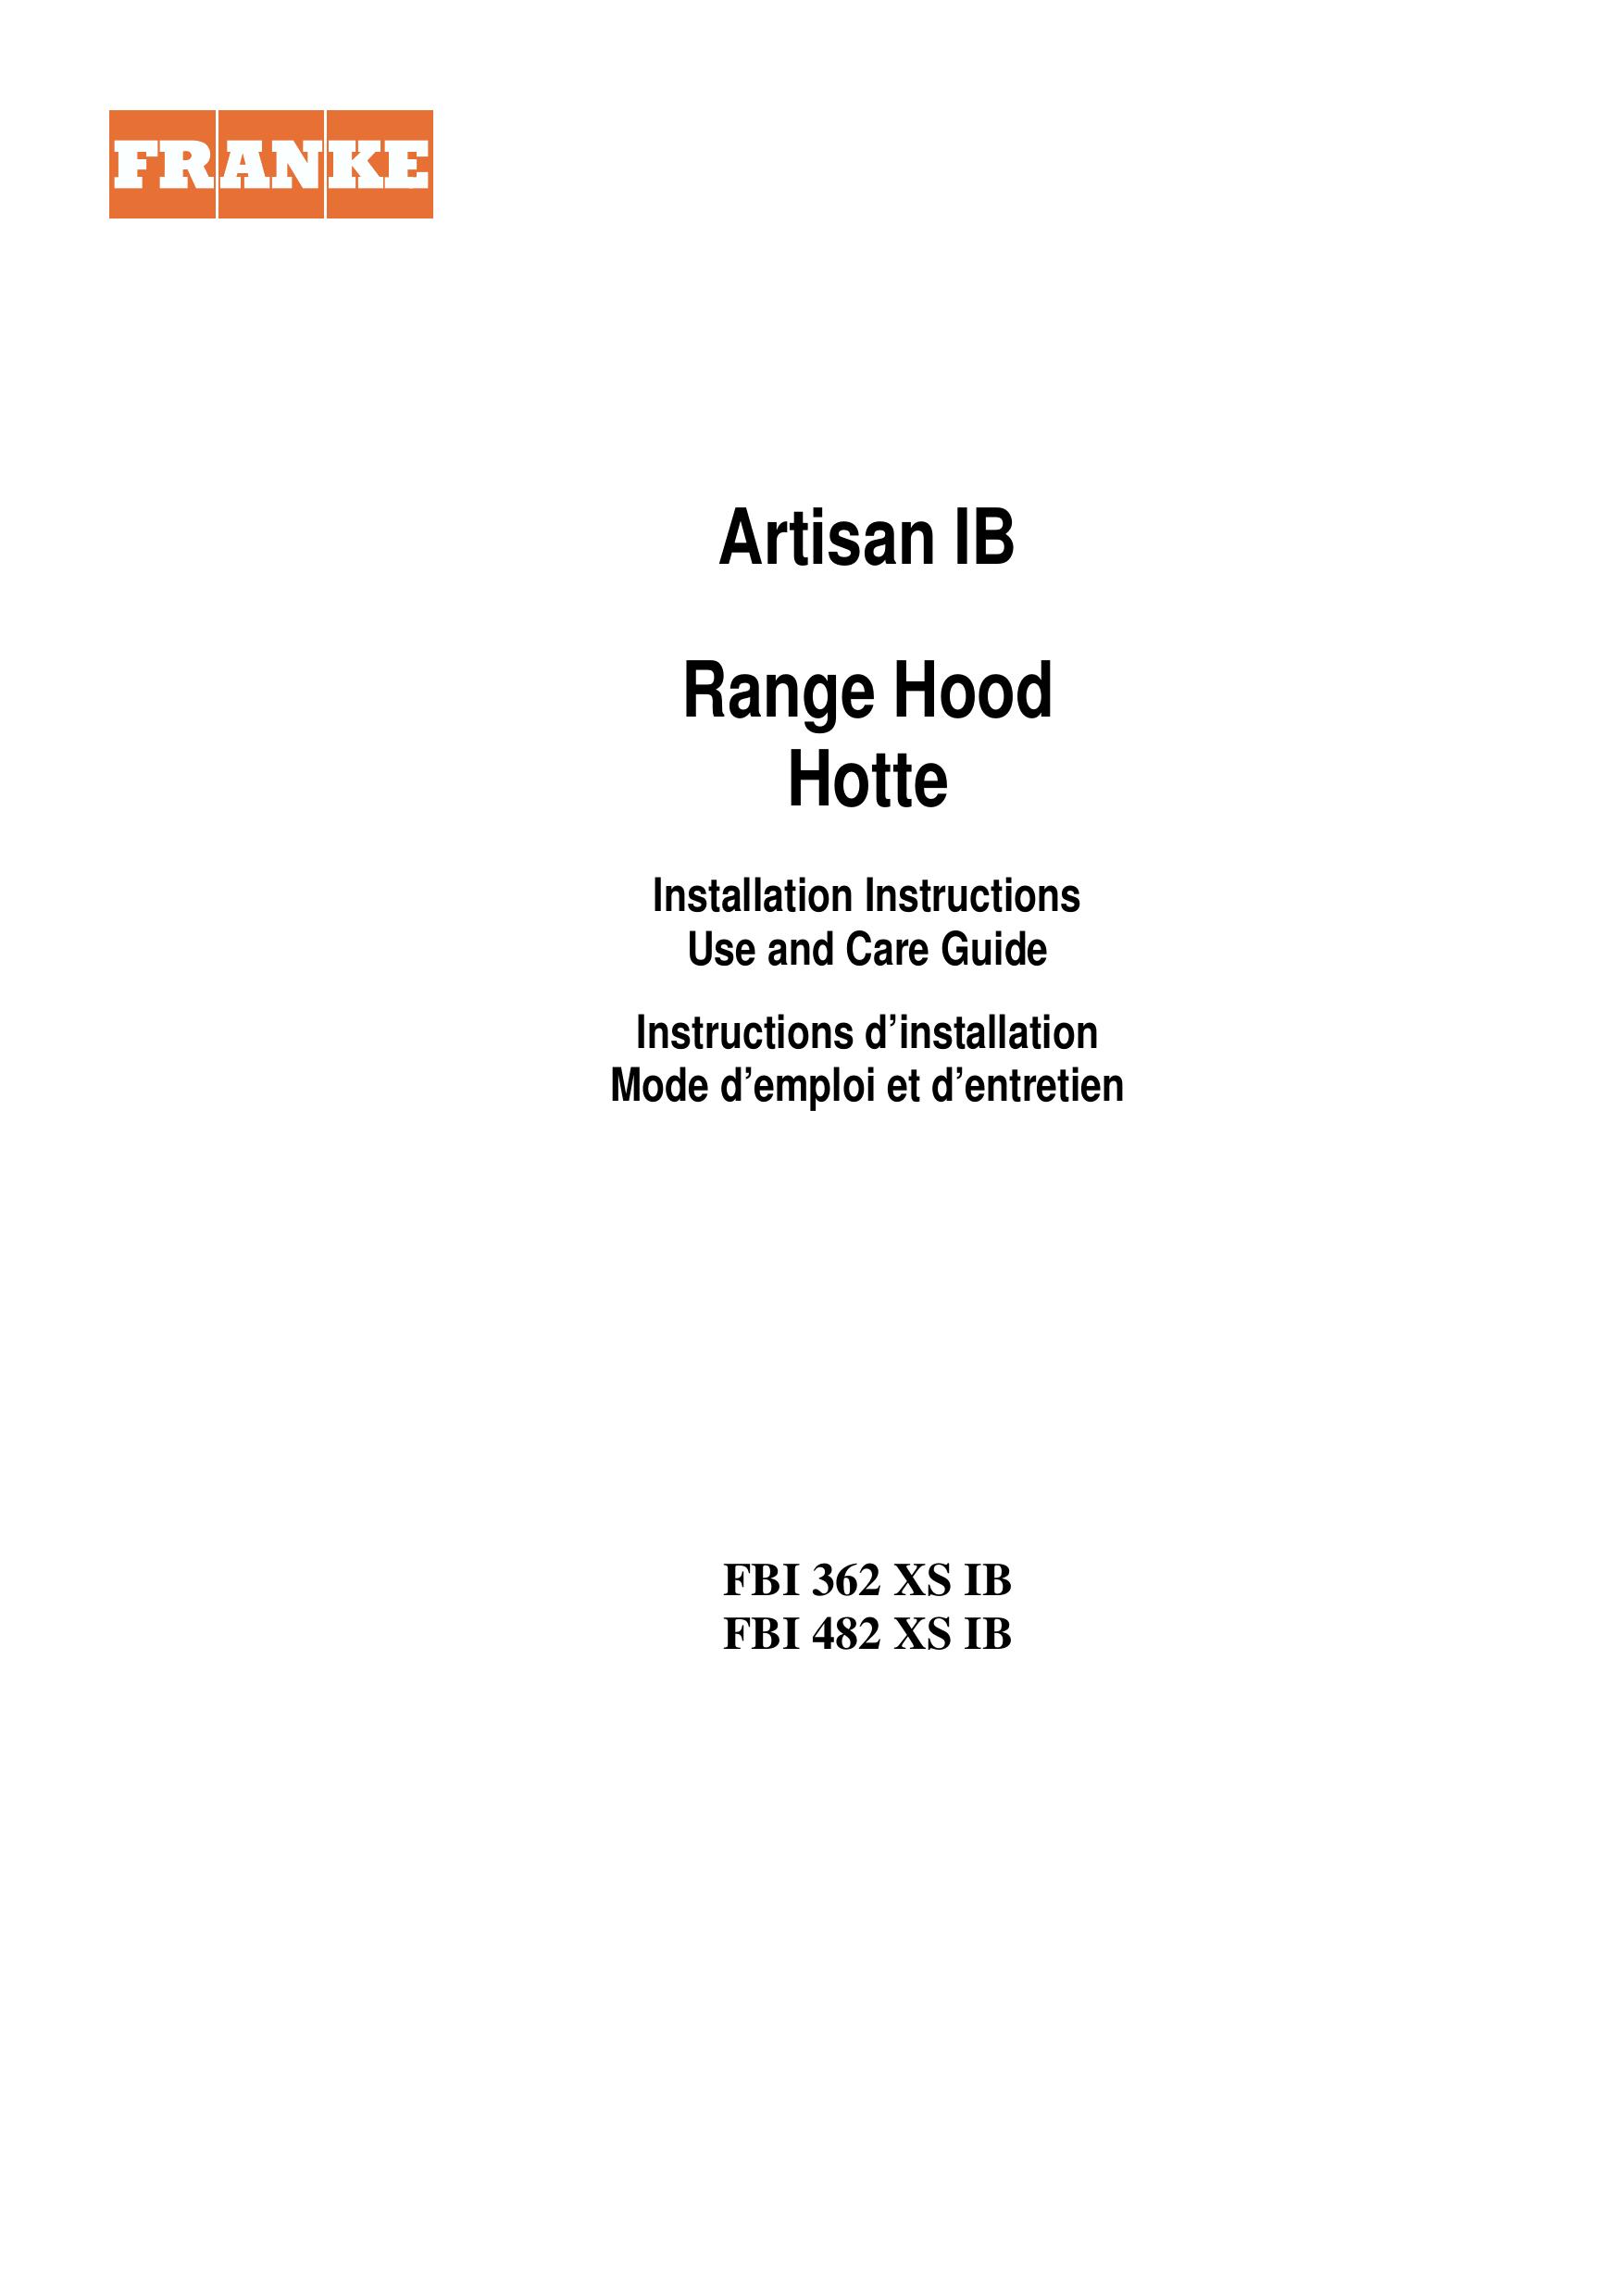 Franke Consumer Products FBI 482 XS IB Ventilation Hood User Manual